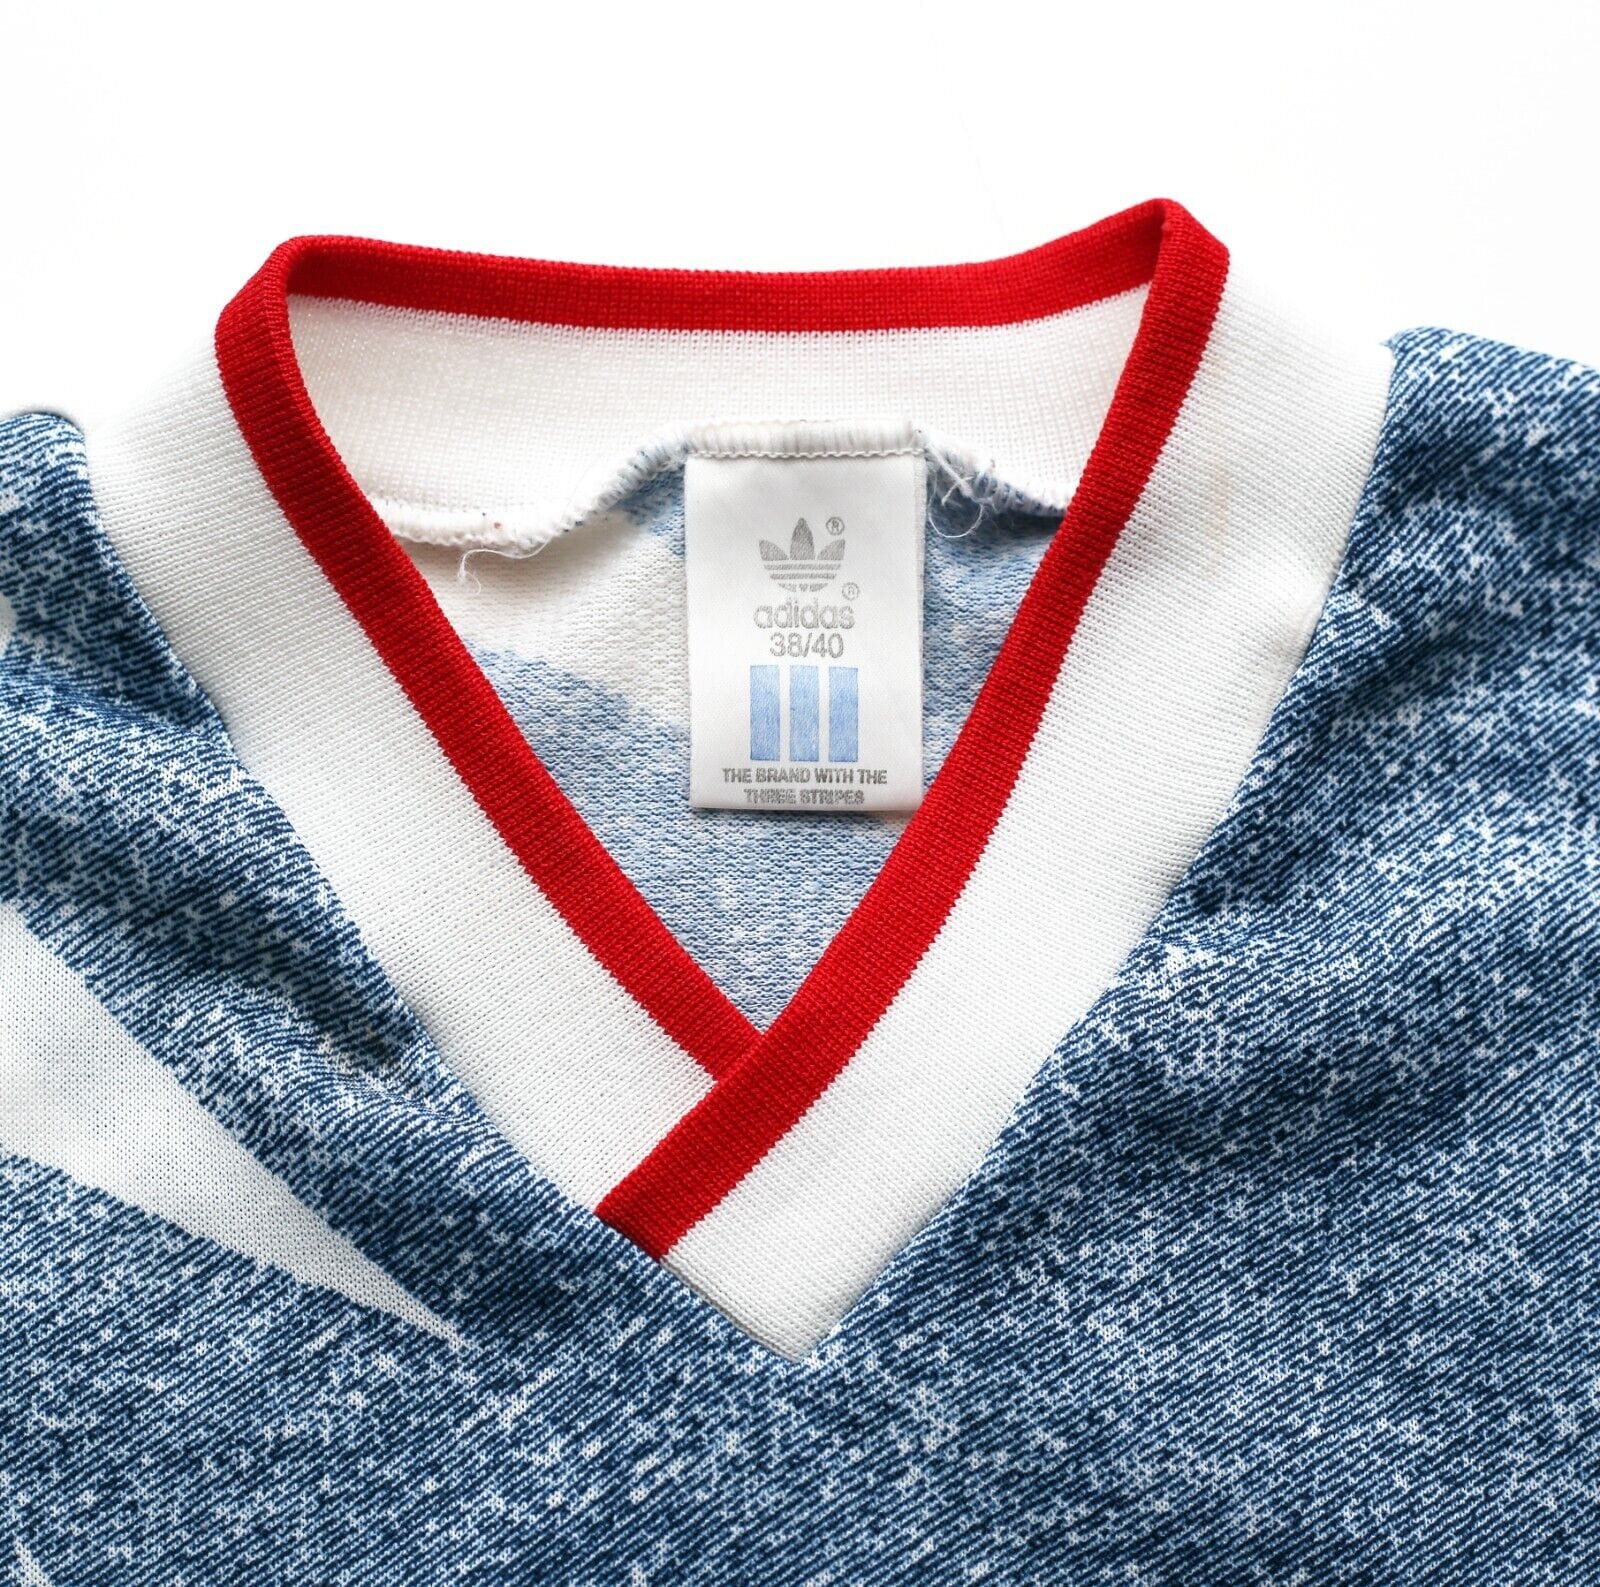 1994/95 USA Vintage adidas Away Football Shirt Jersey 38/40 (M) World Cup 94